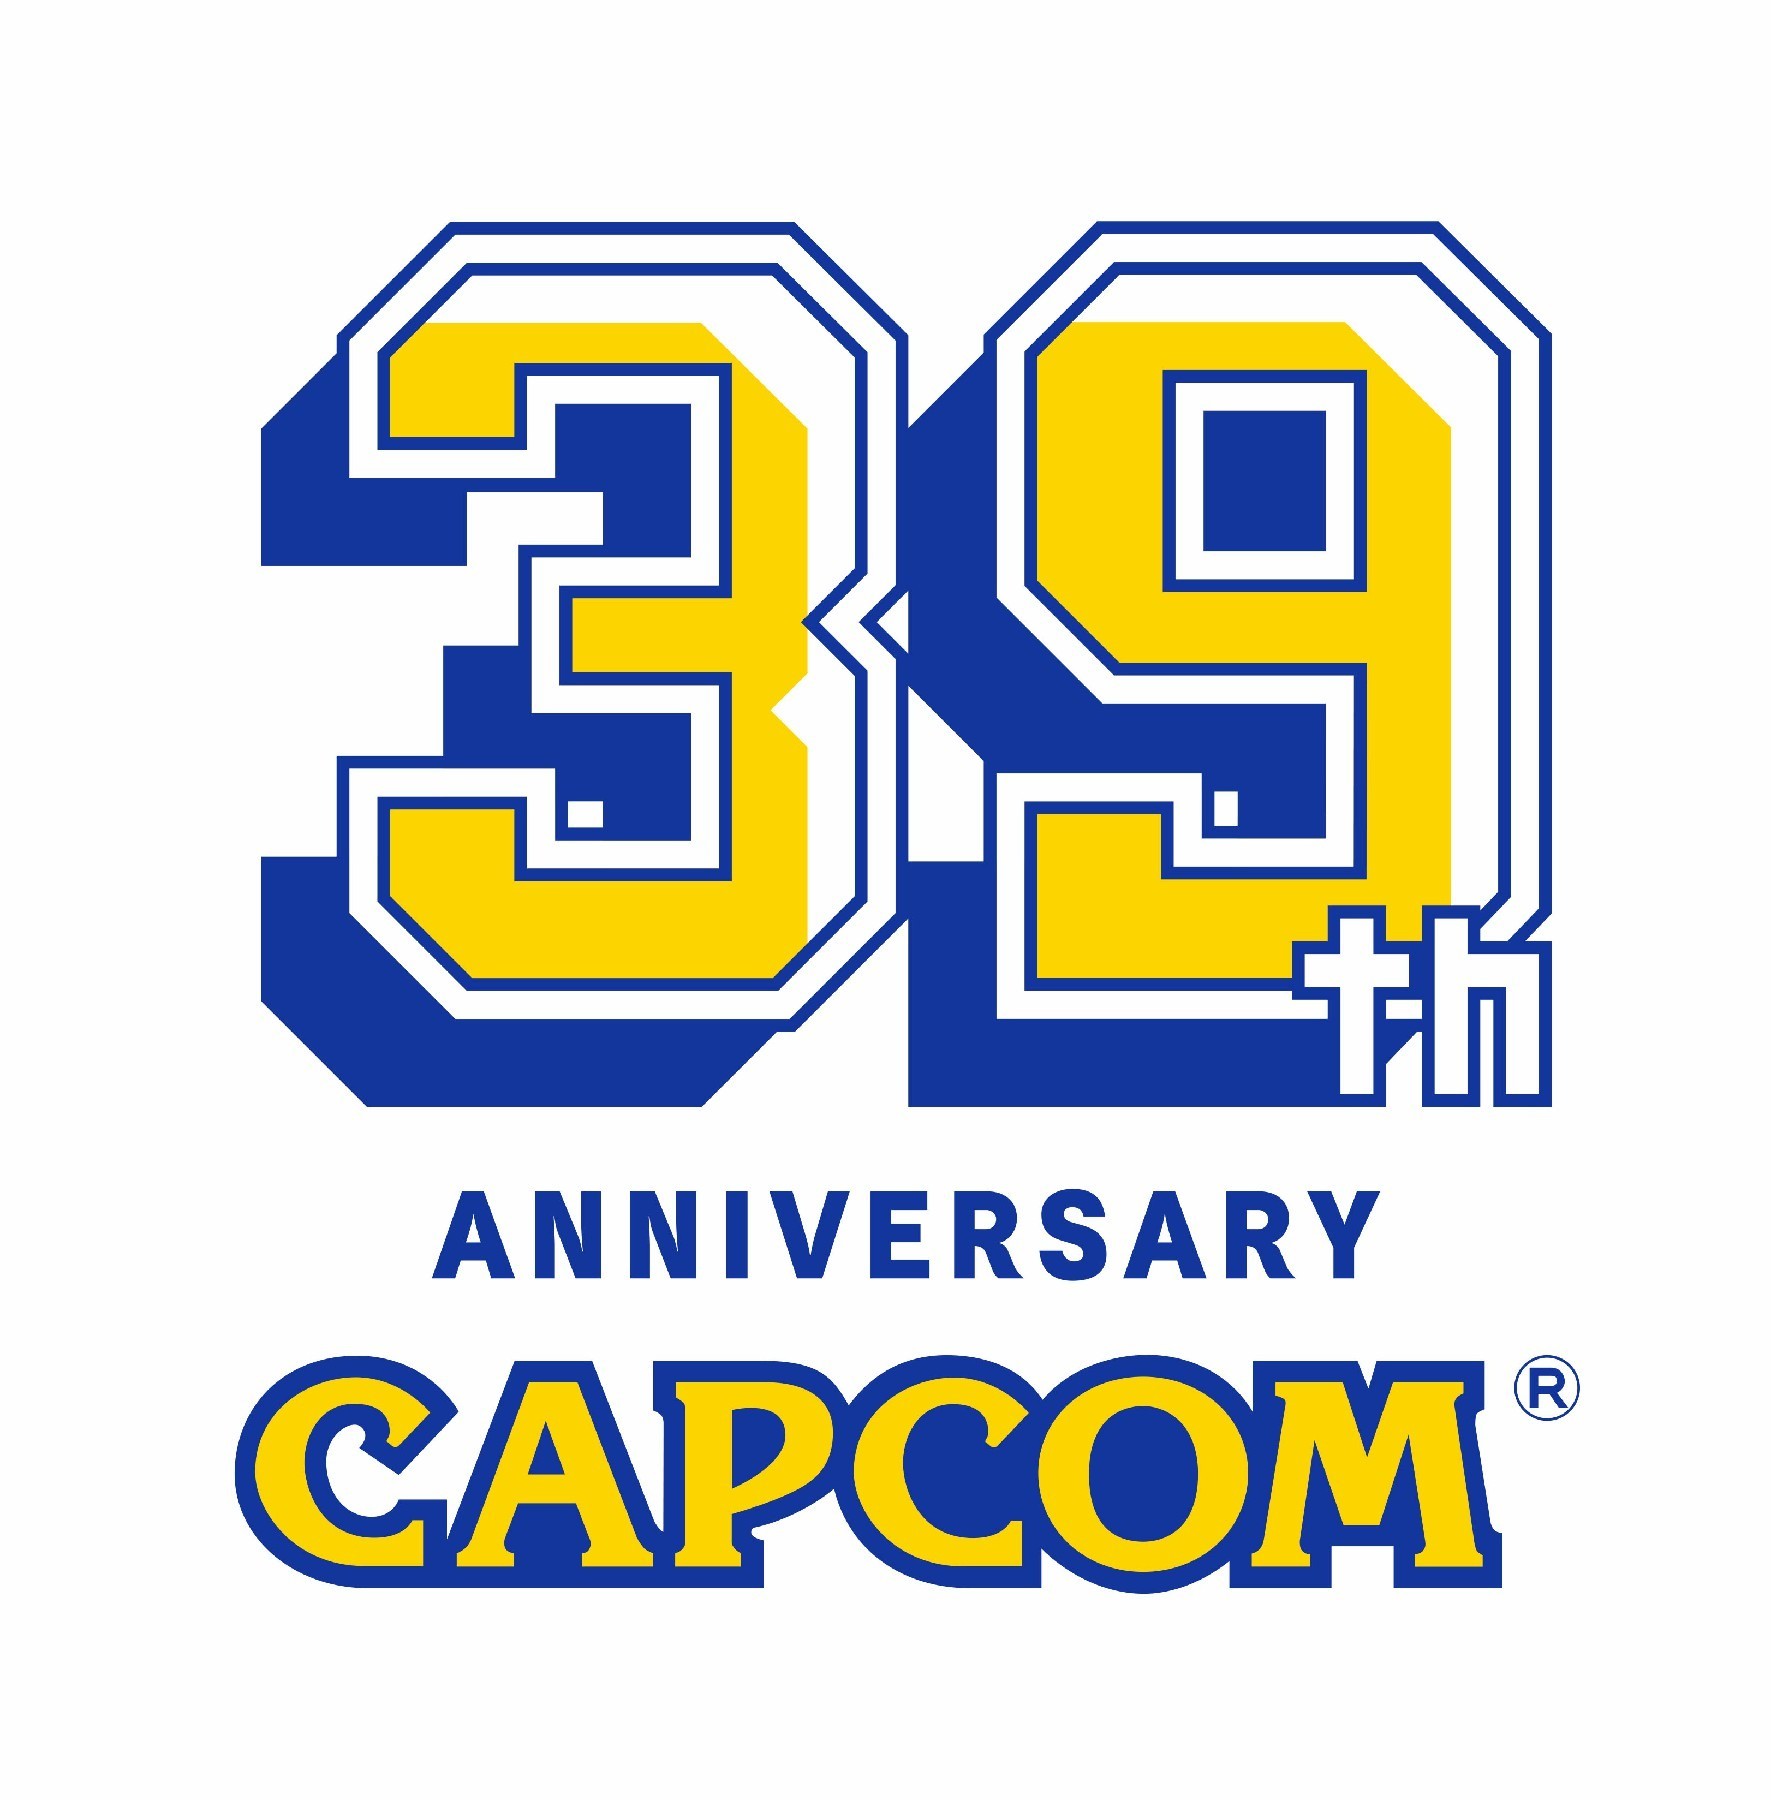 CAPCOM 經典大型電玩合輯第二彈《Capcom Arcade 2nd Stadium》7/22 登場